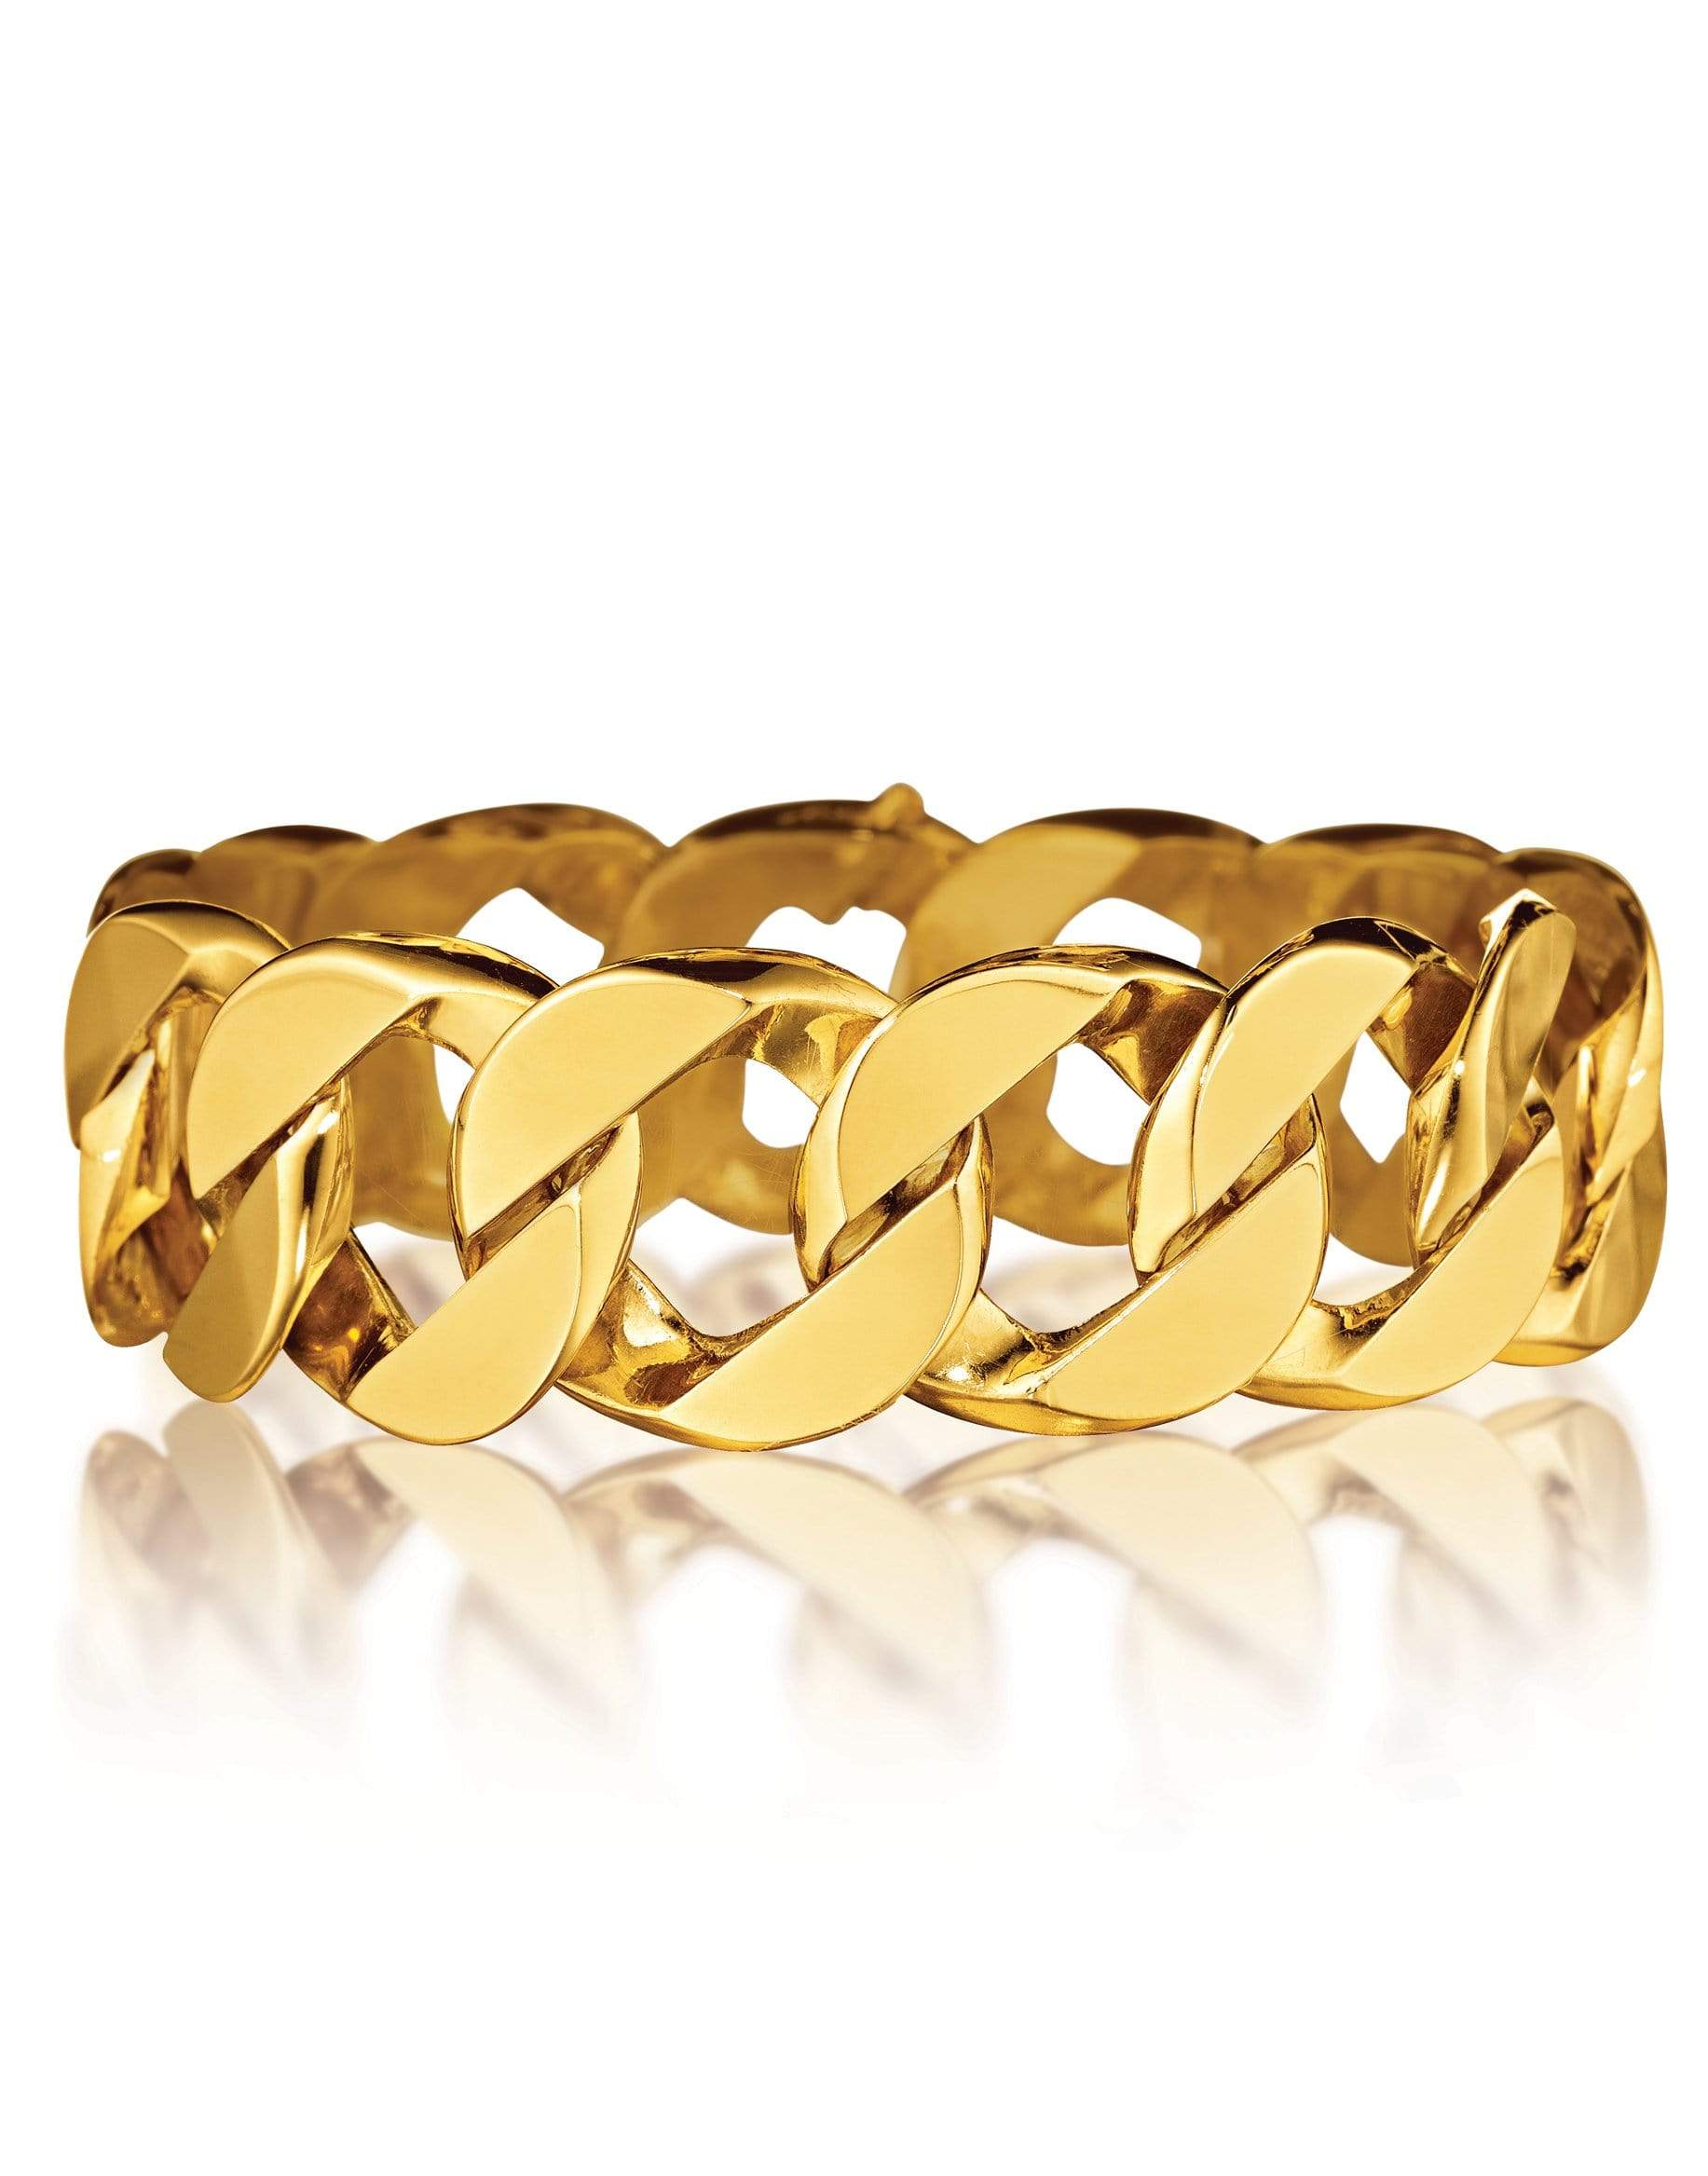 VERDURA-Curb Link Bracelet-YELLOW GOLD